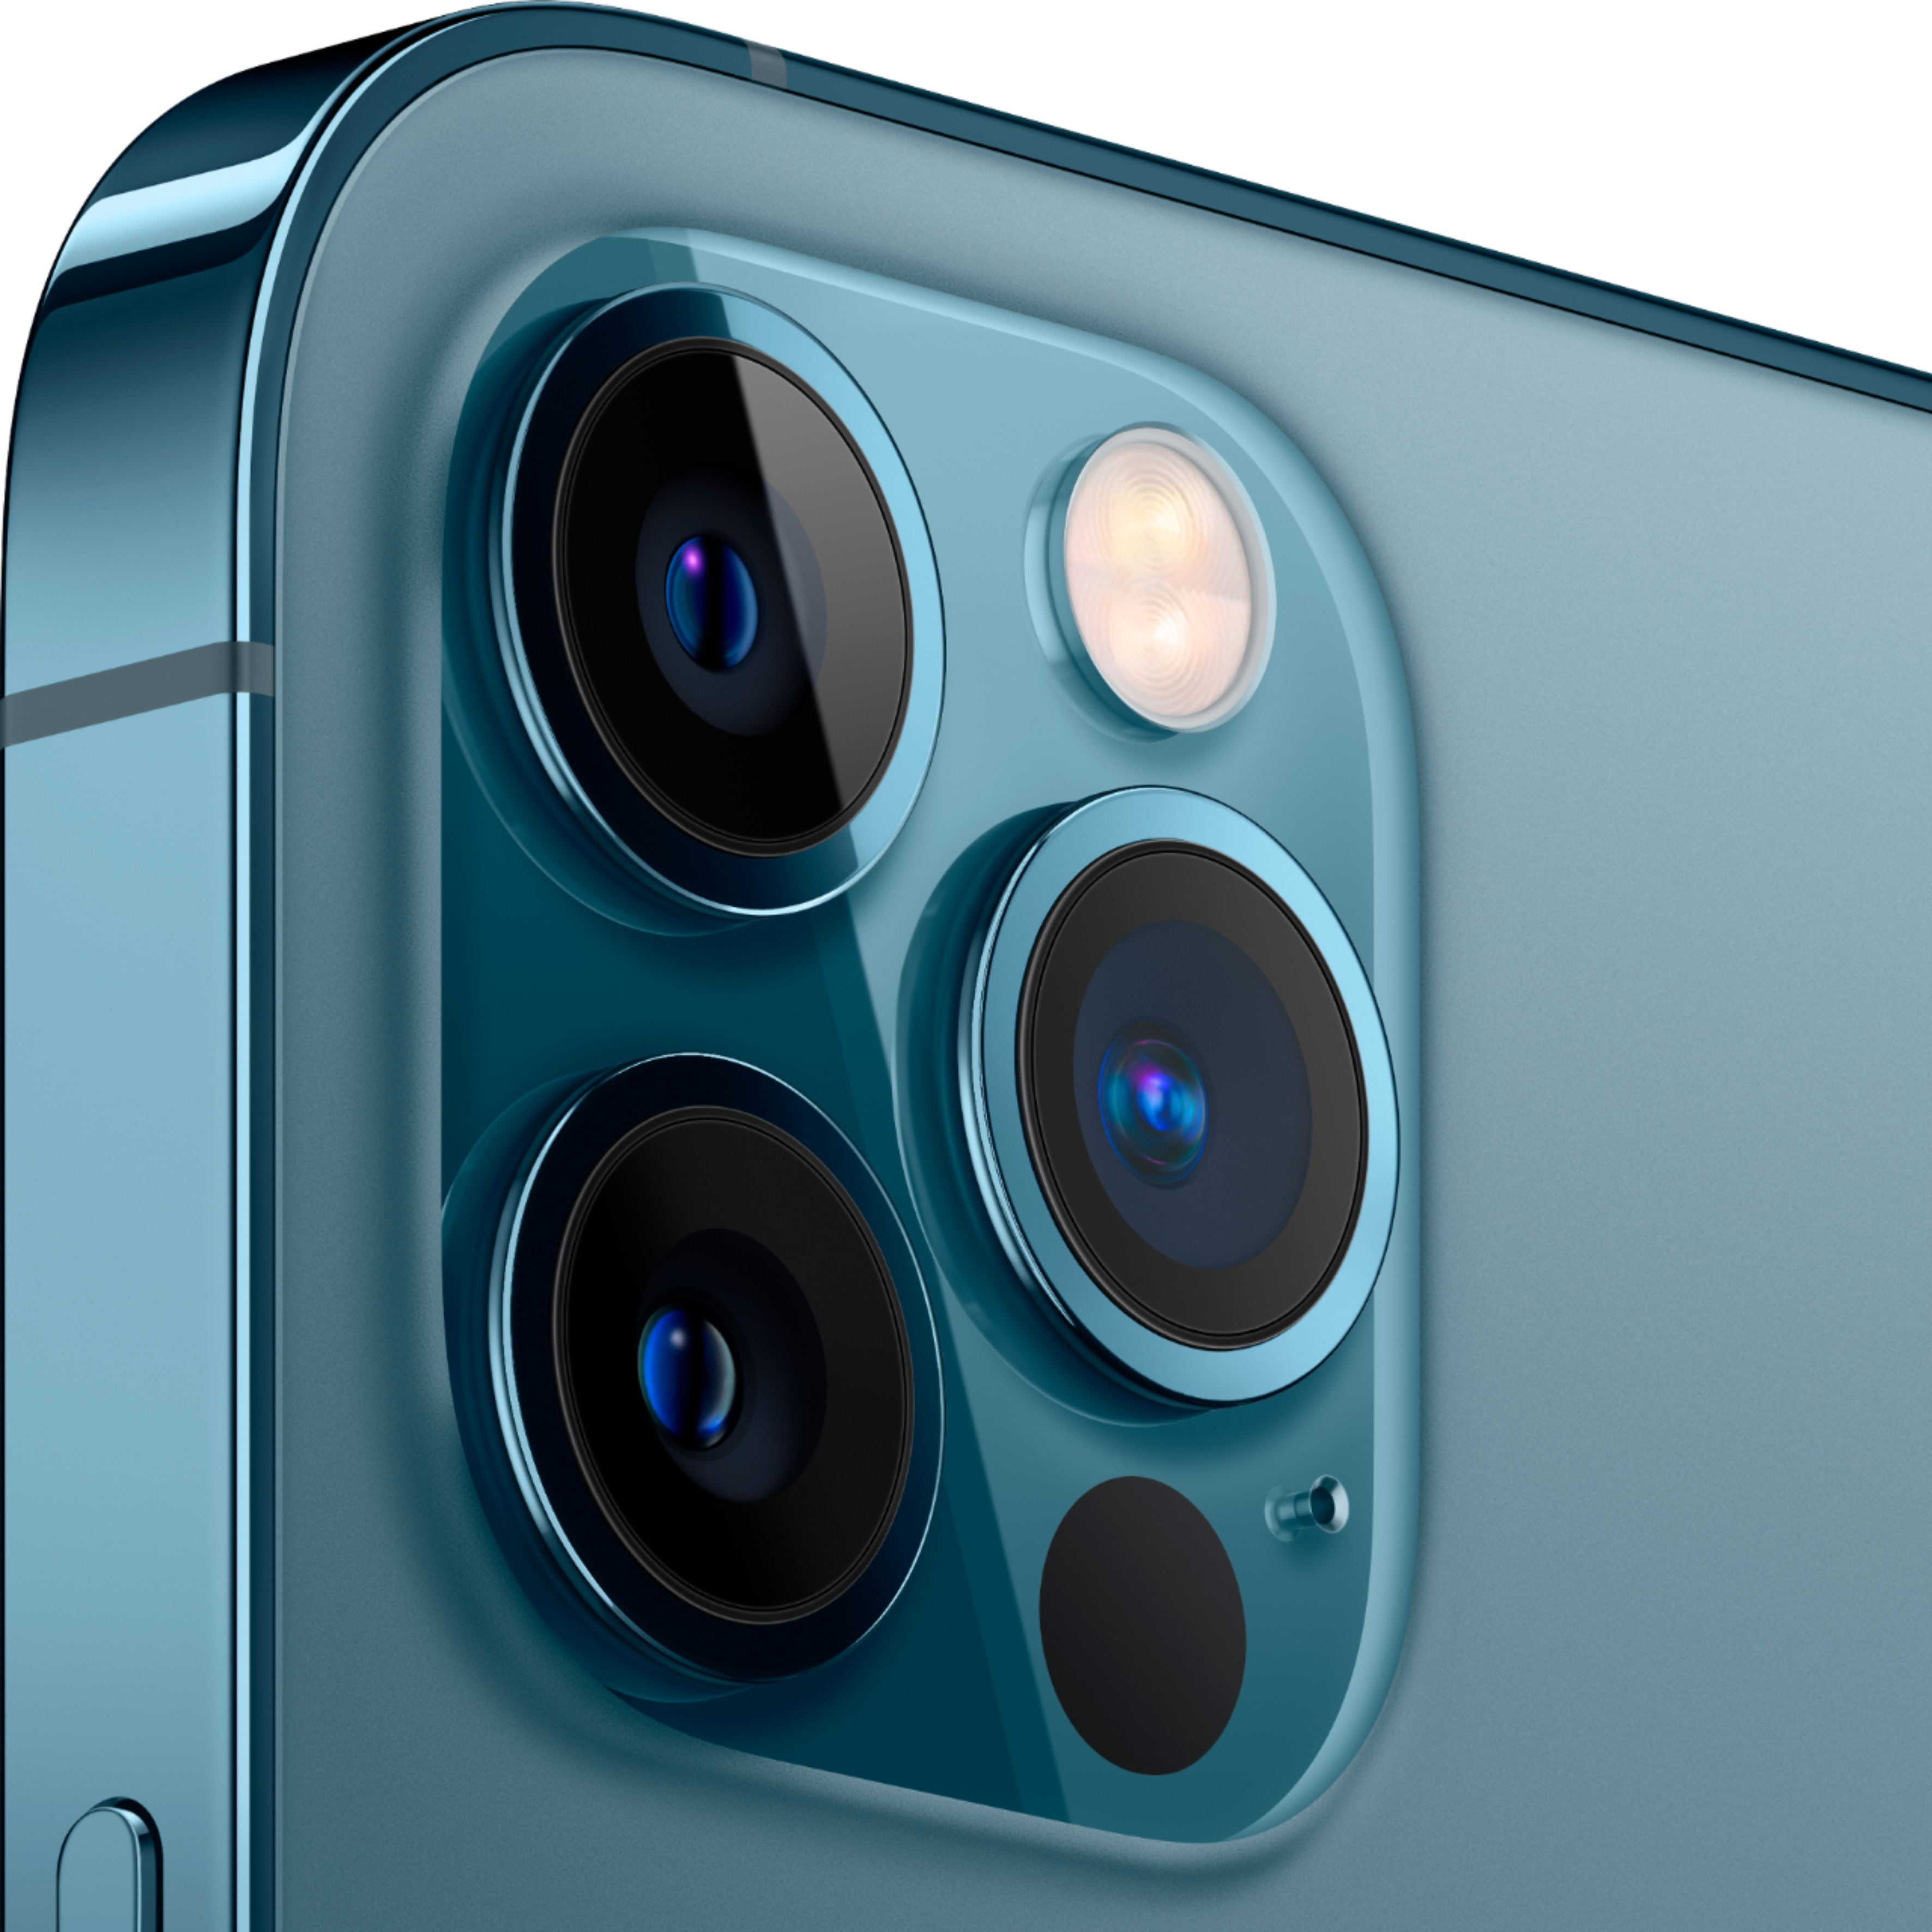 Refurbished iPhone 12 Pro 128GB - Pacific Blue (Unlocked) - Apple